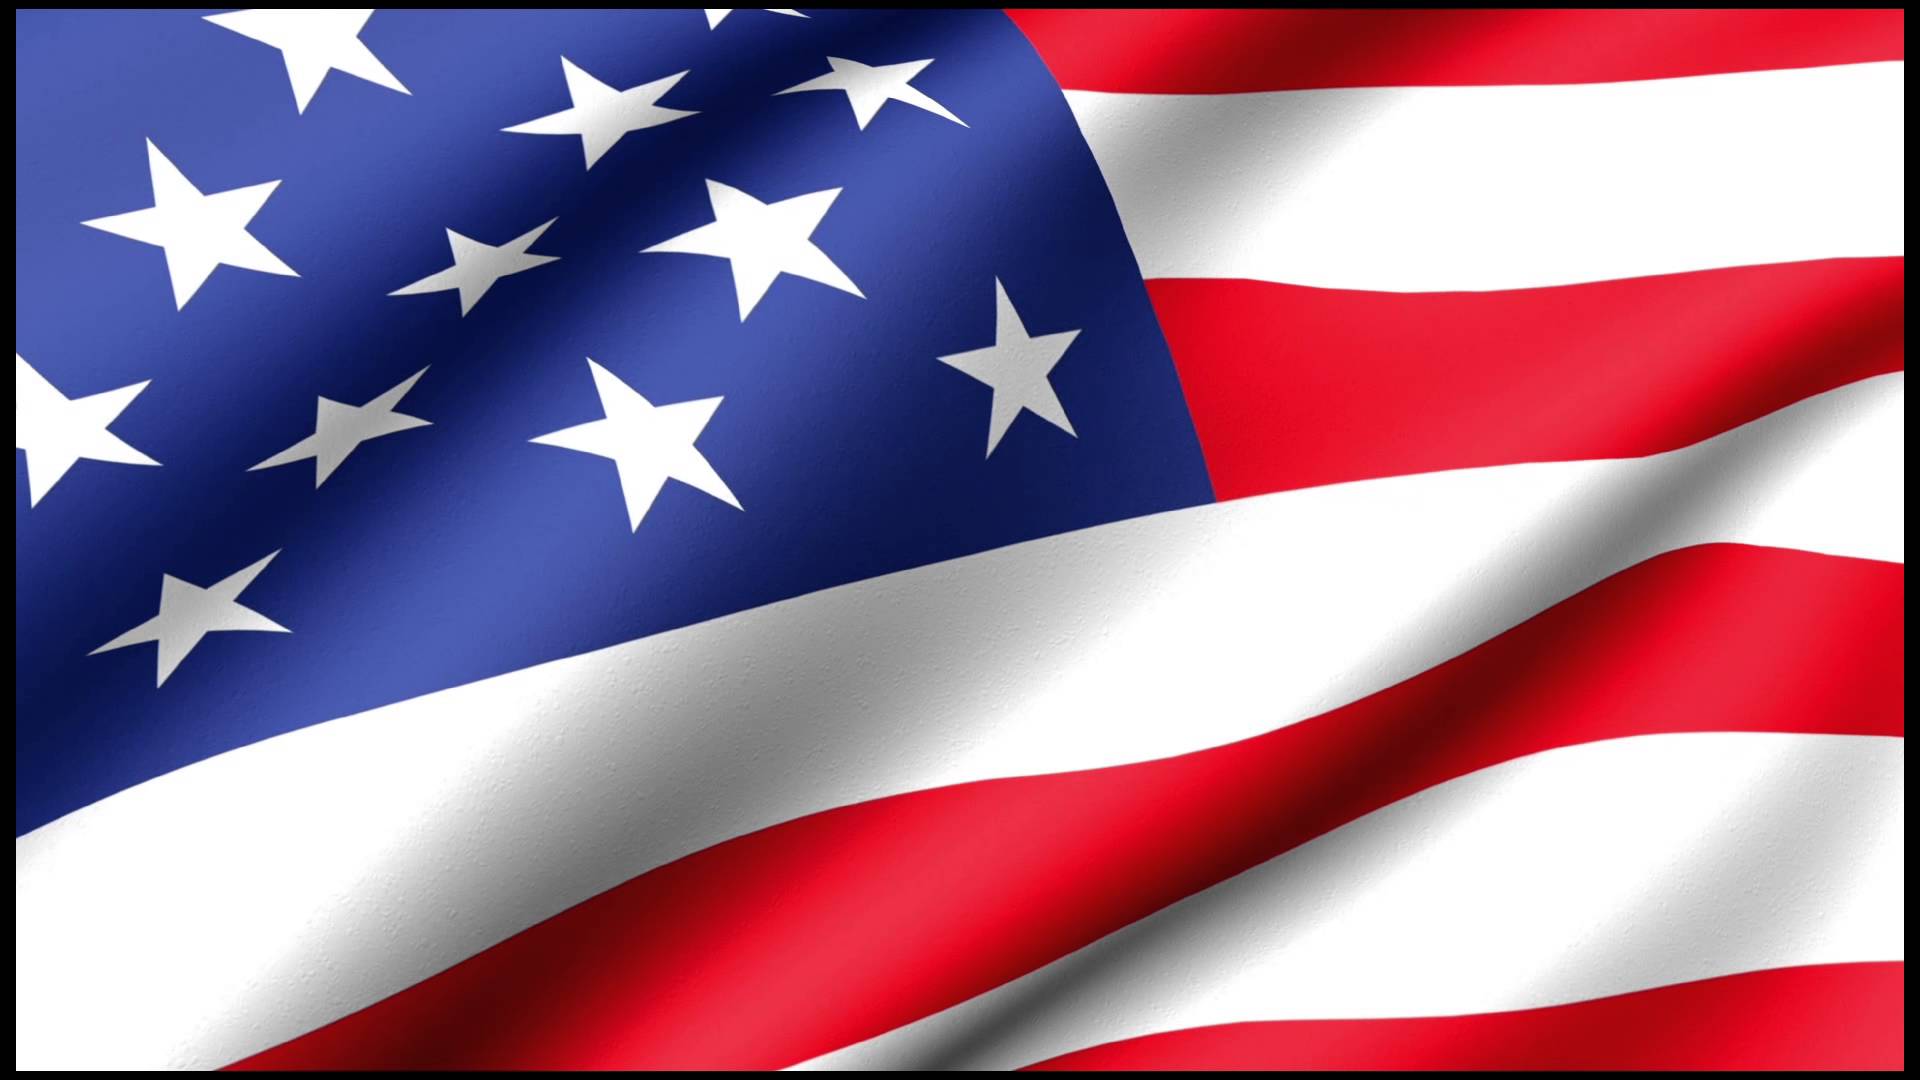 USA American Flag Waving Loop 4K - YouTube